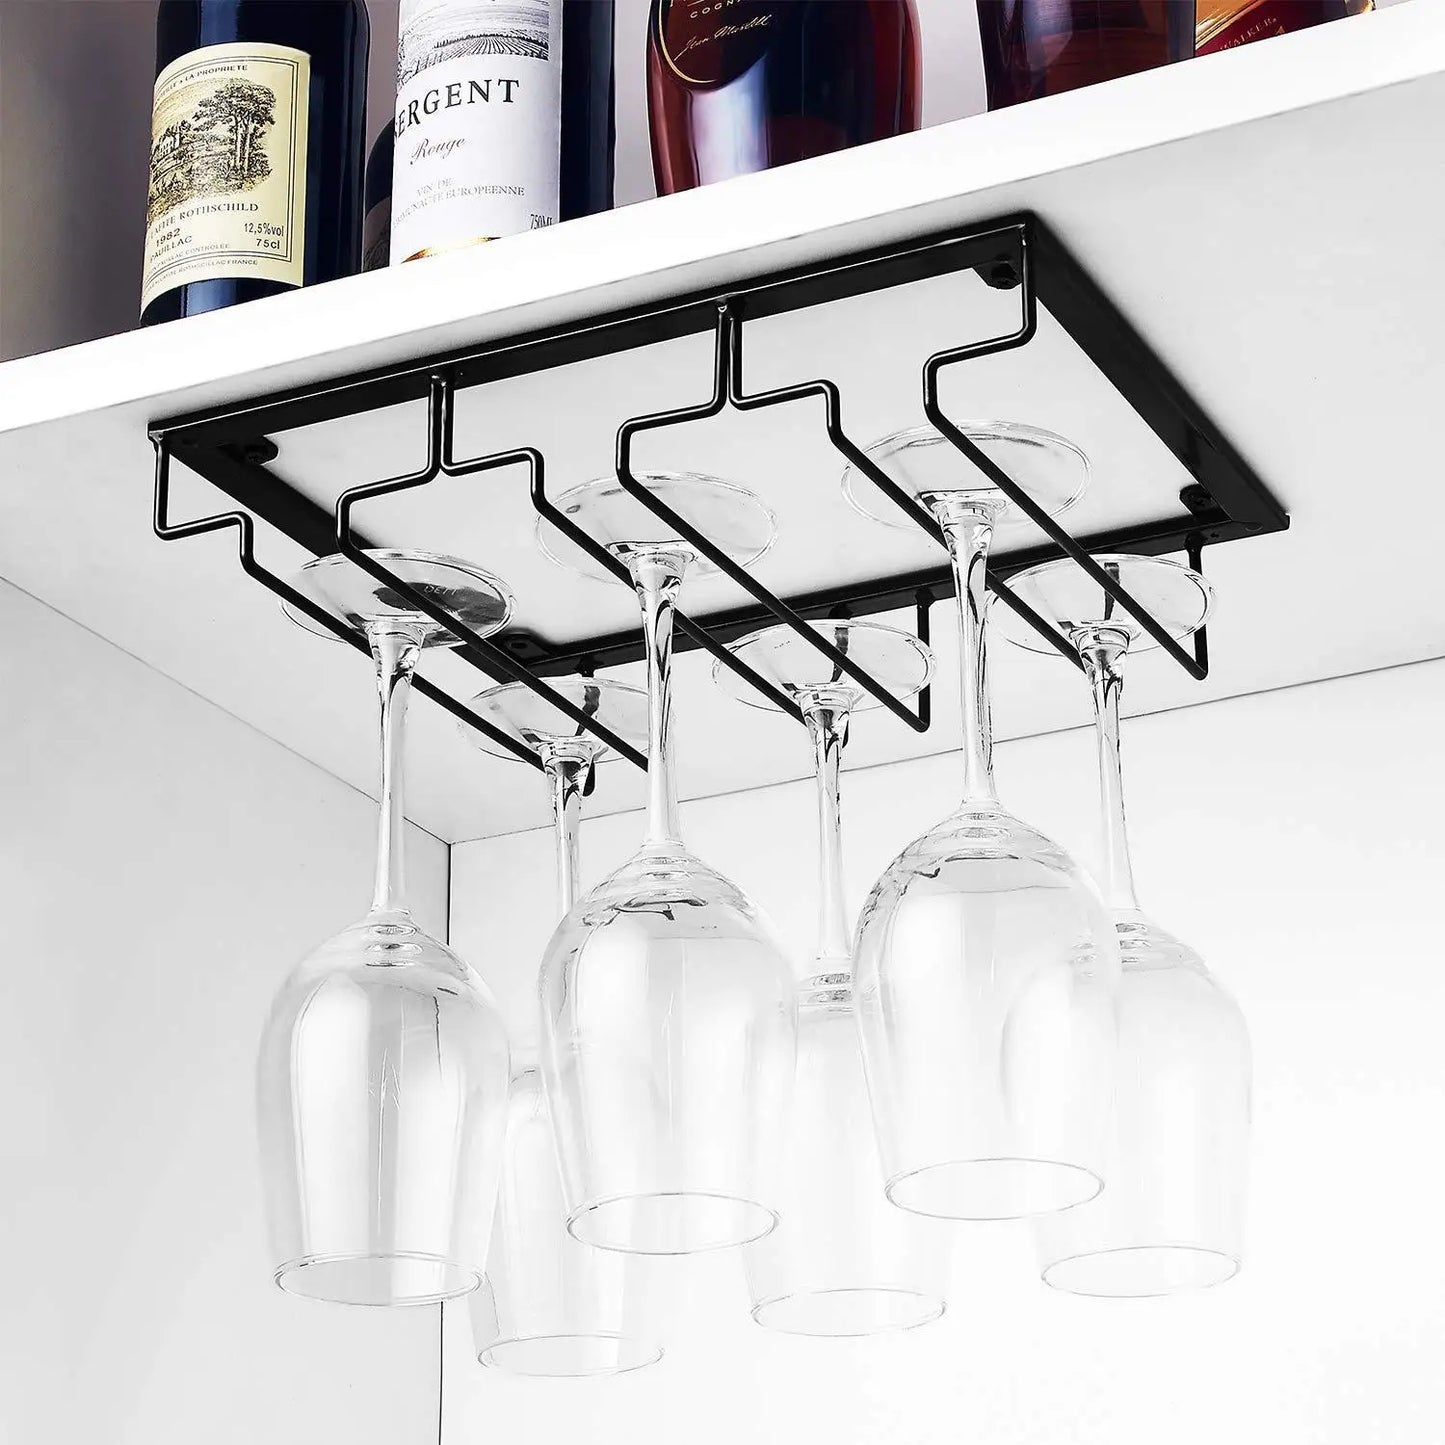 Shelf Mount Wine Glass Holder Hanging Rack